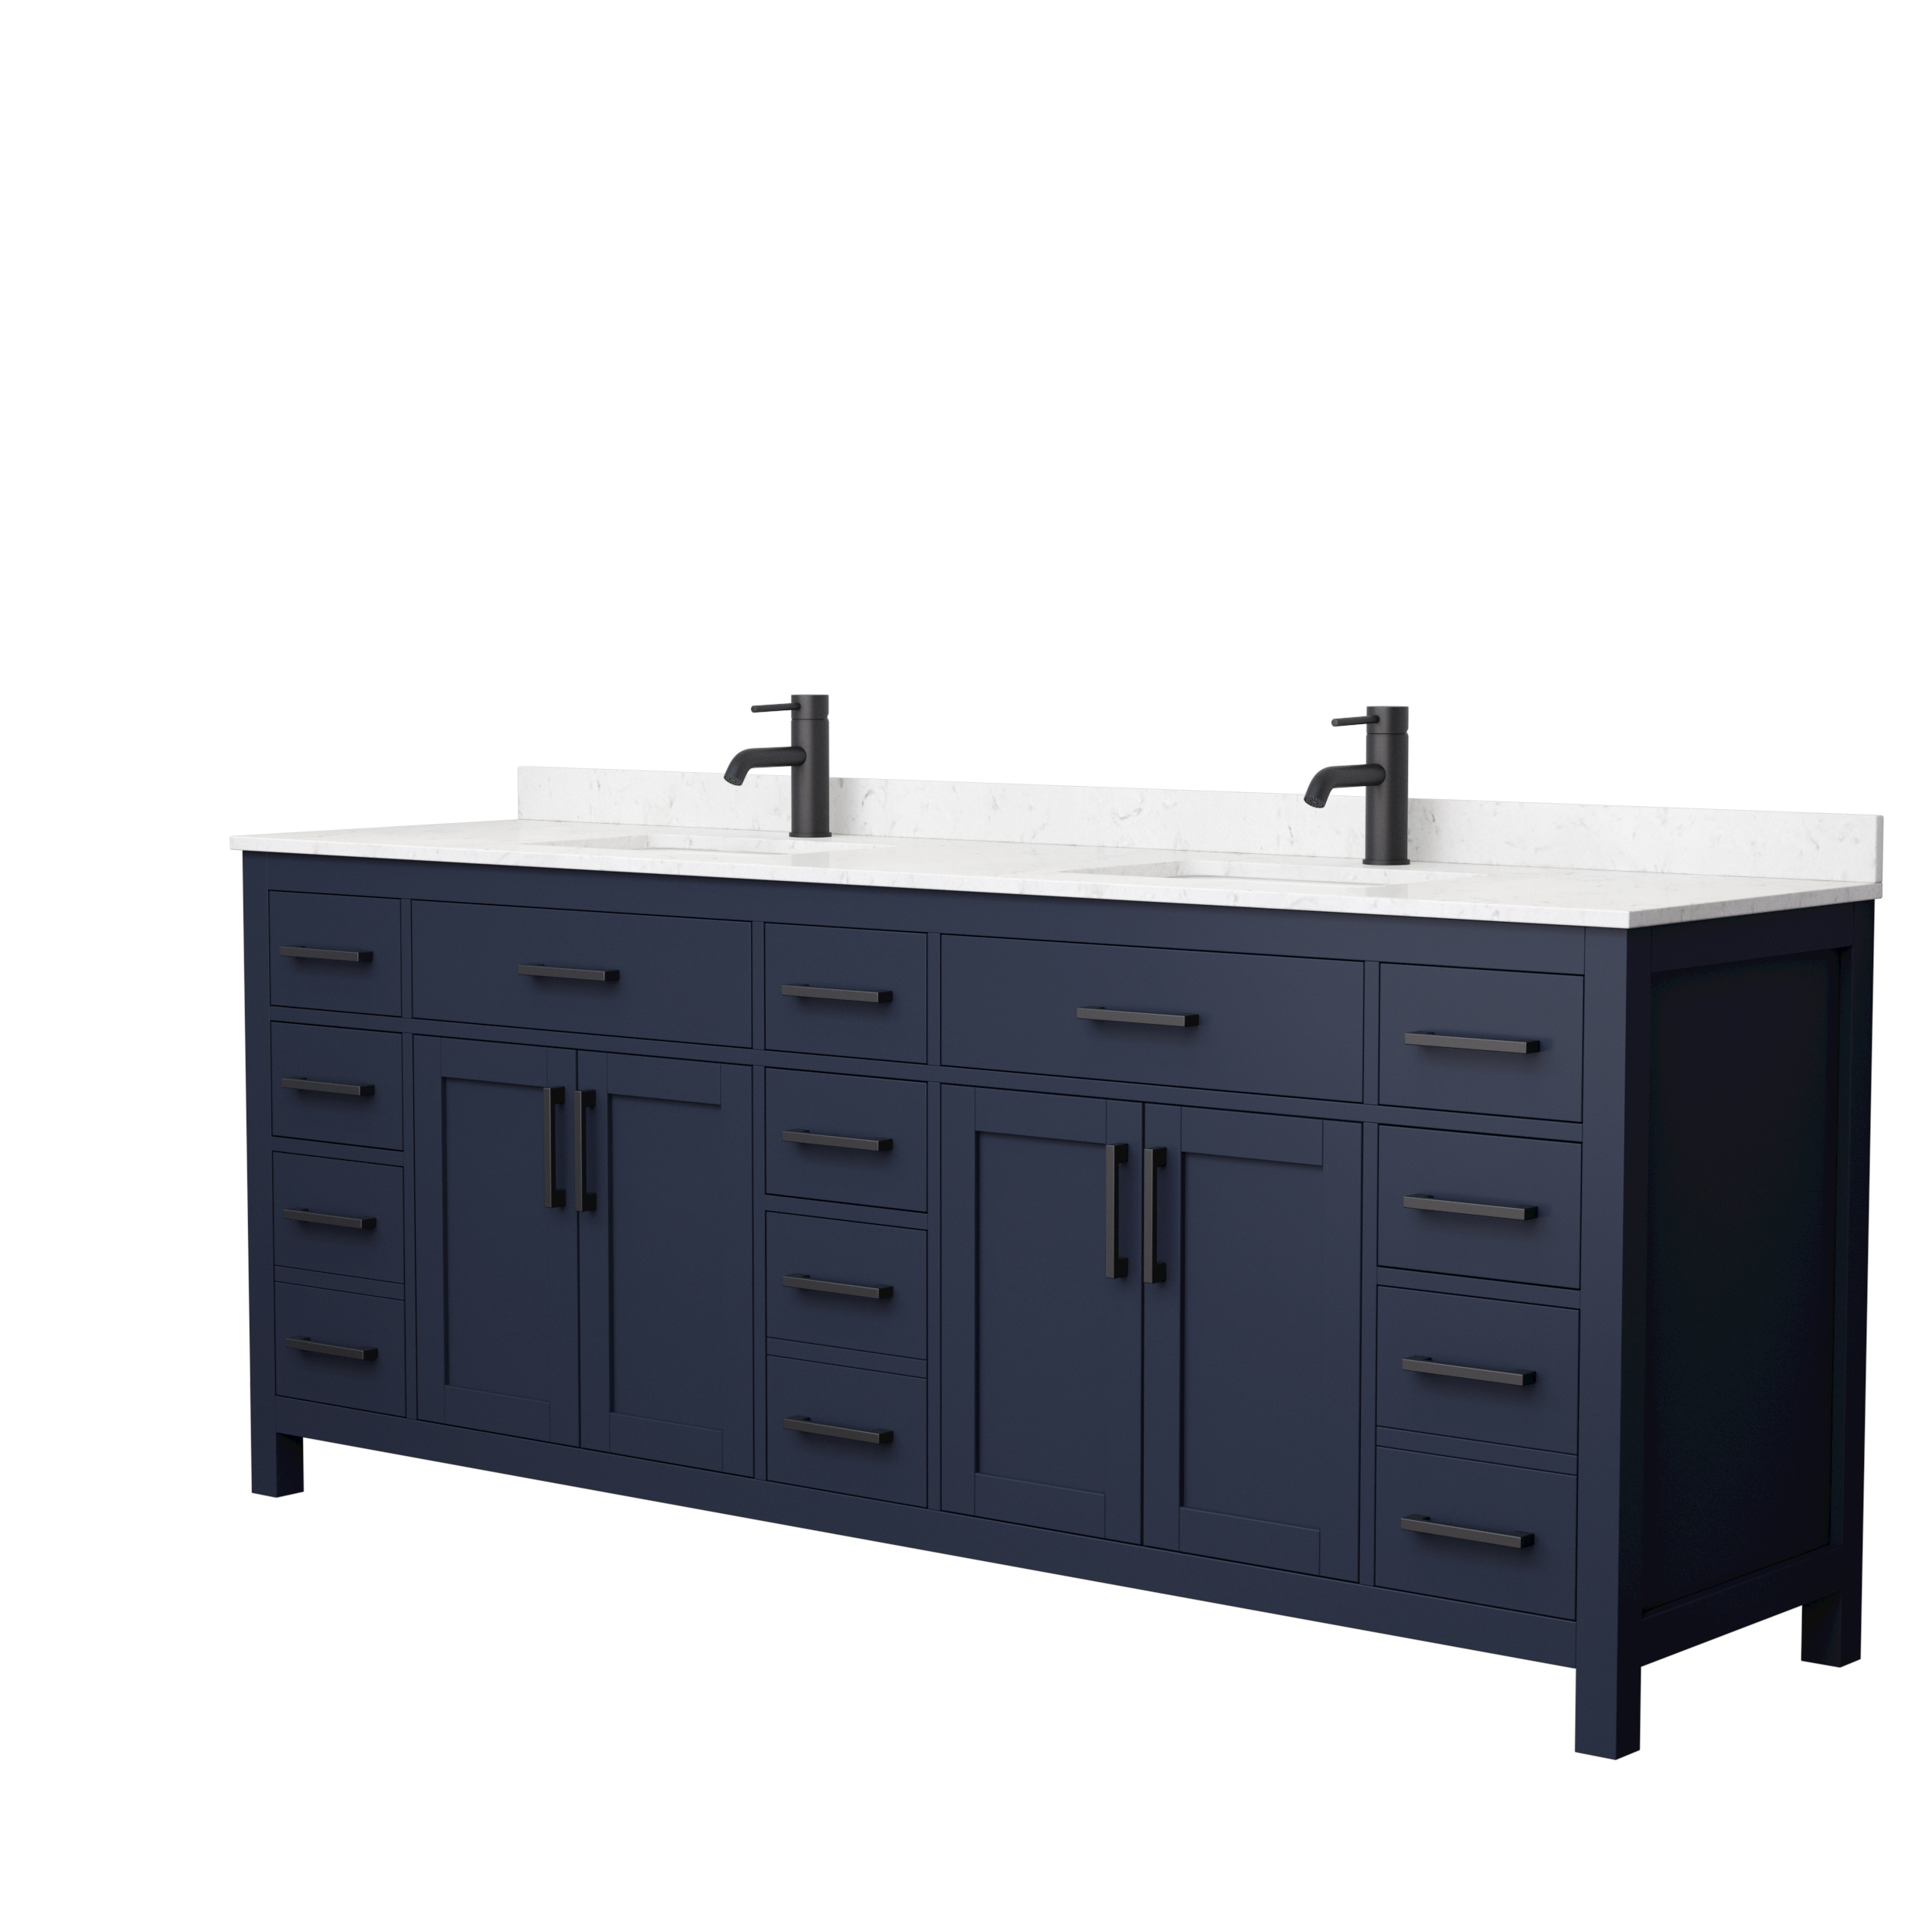 84" Double Bathroom Vanity in Dark Blue, Carrara Cultured Marble Countertop, Undermount Square Sinks, 3 Trim options 